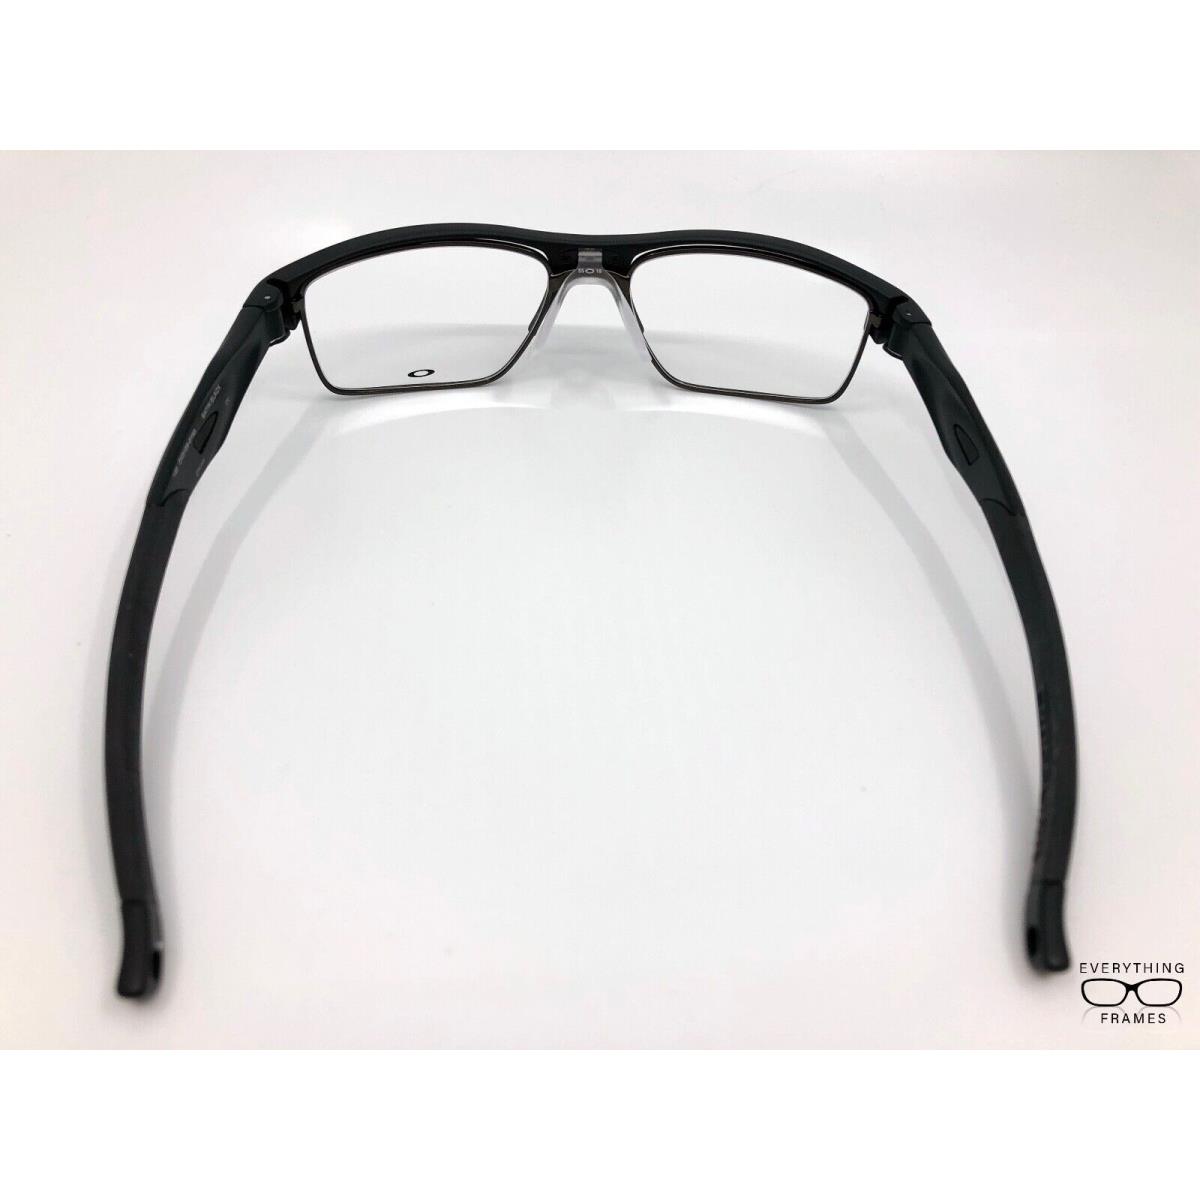 Ray-Ban eyeglasses  - Tortoise and Silver Frame 1